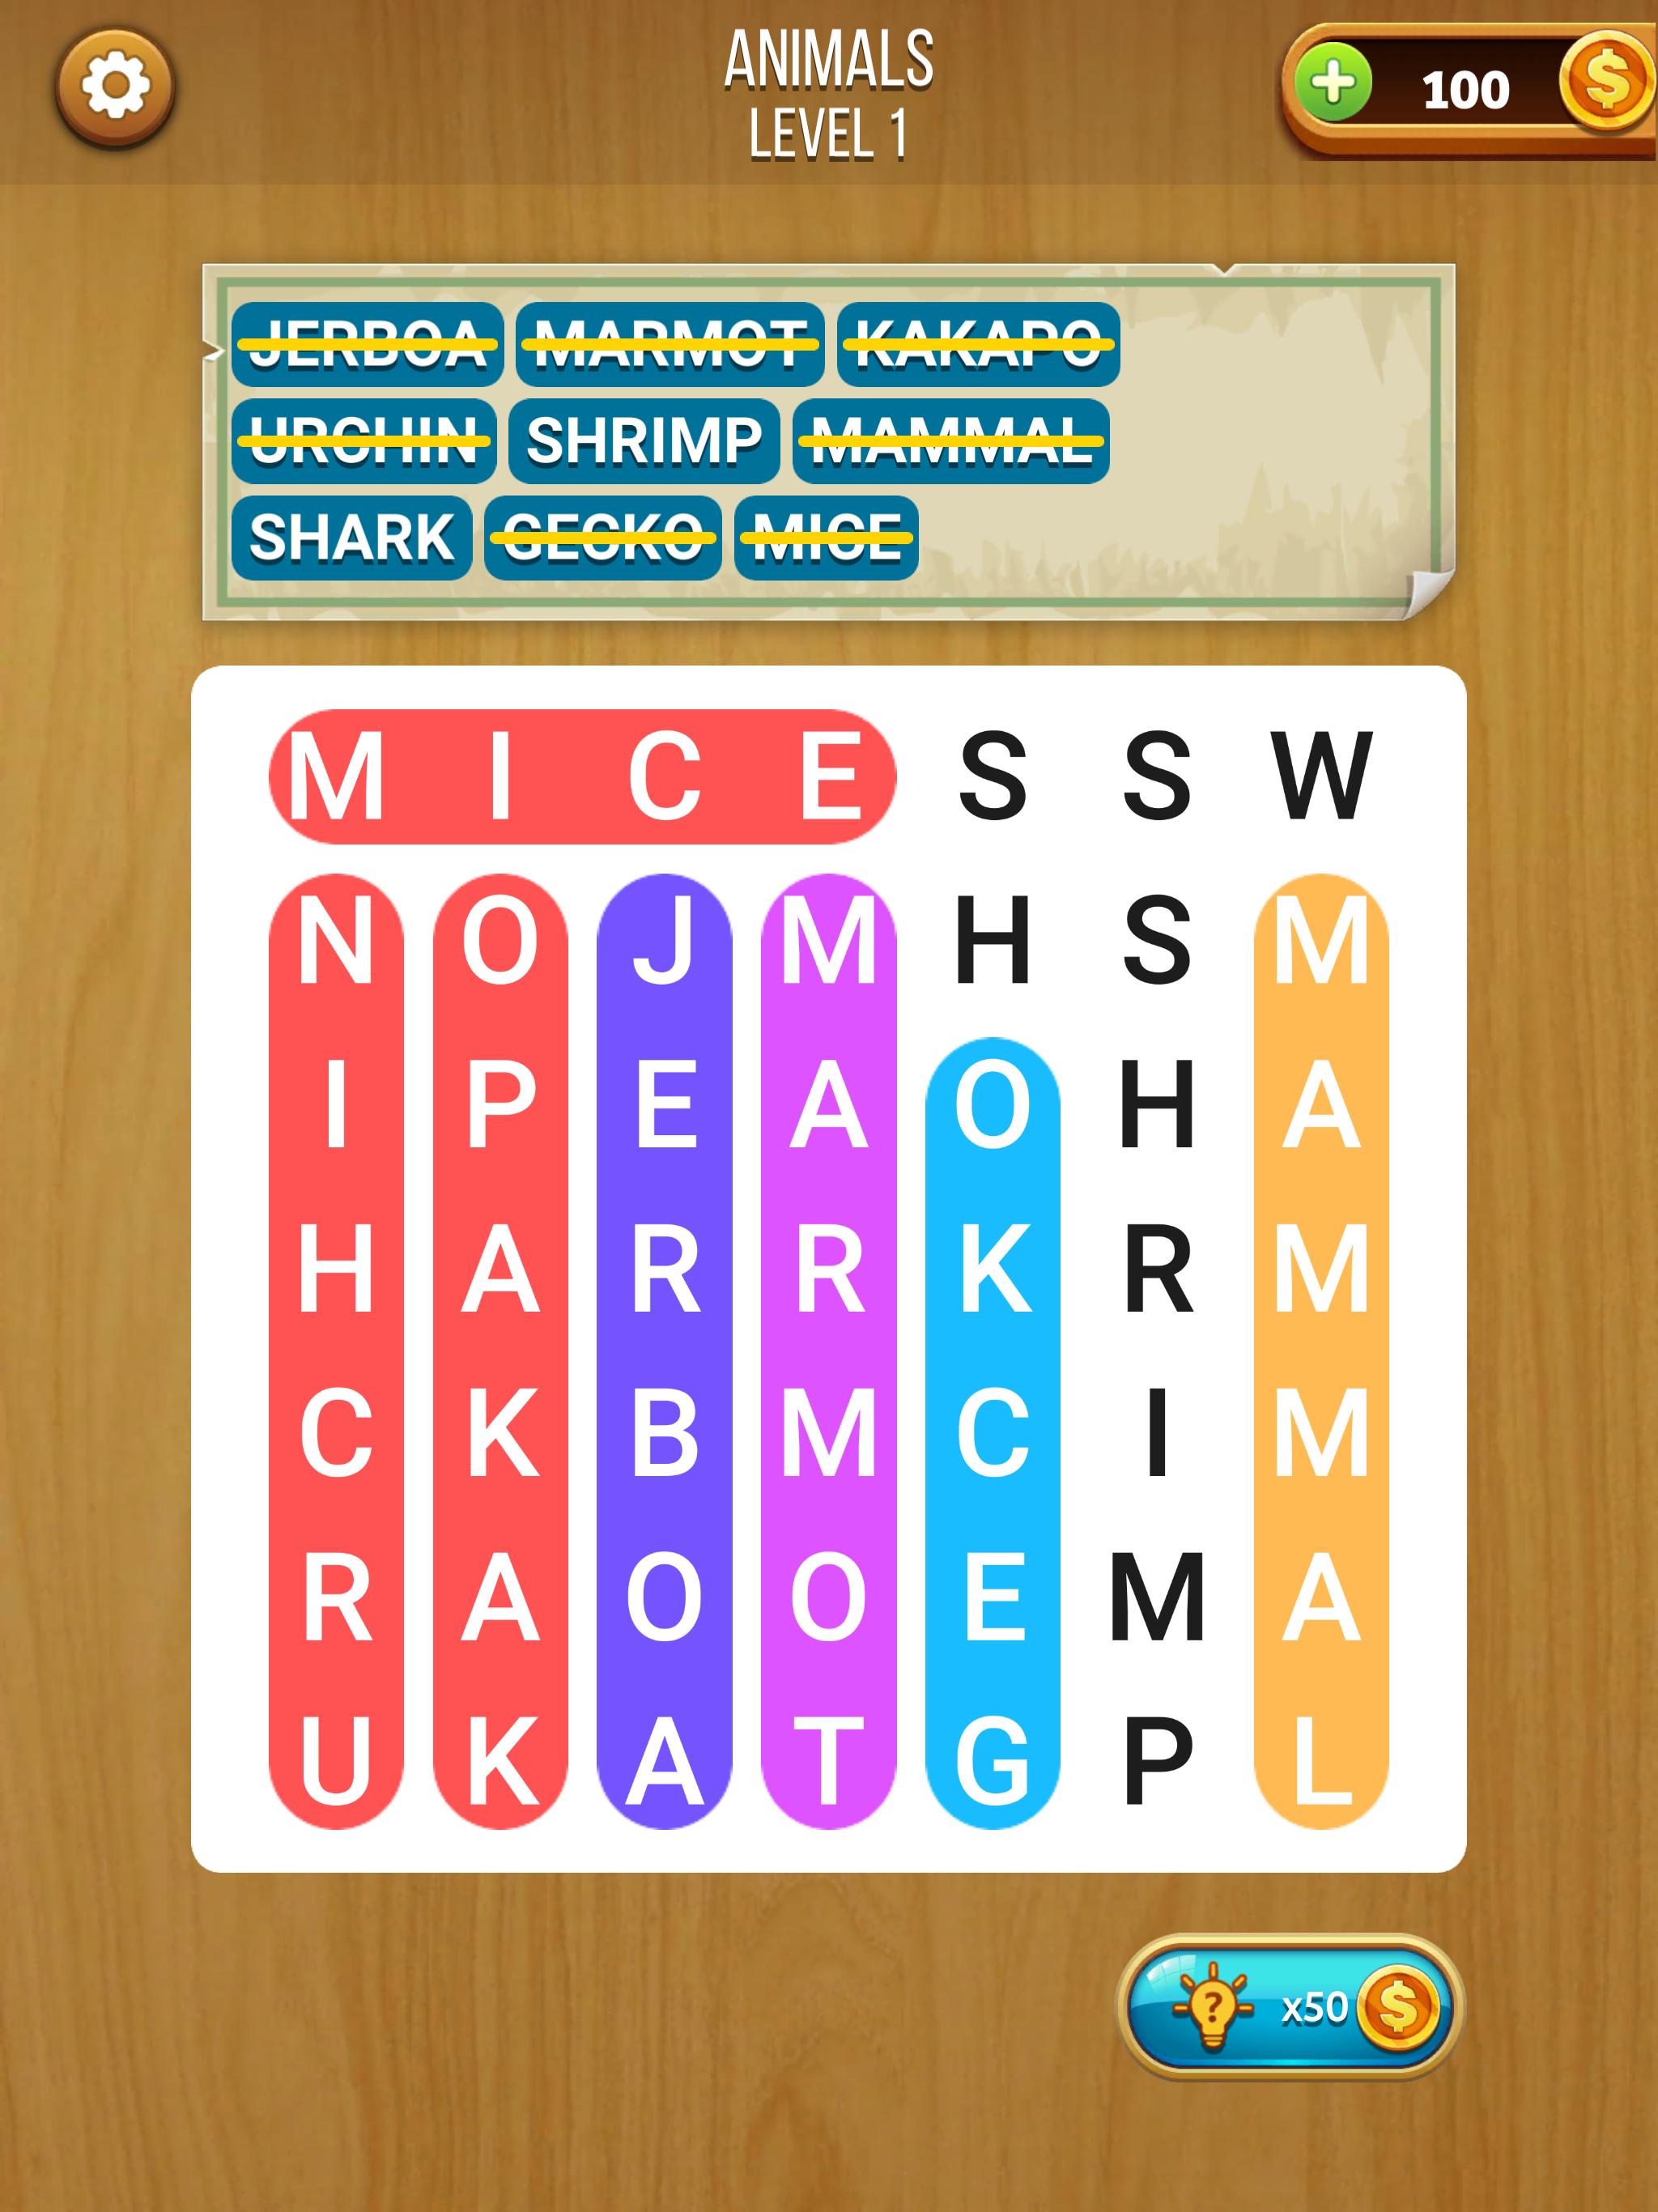 Hidden Words Word Search CrossWord Fun Game 1.0.1 Screenshot 6